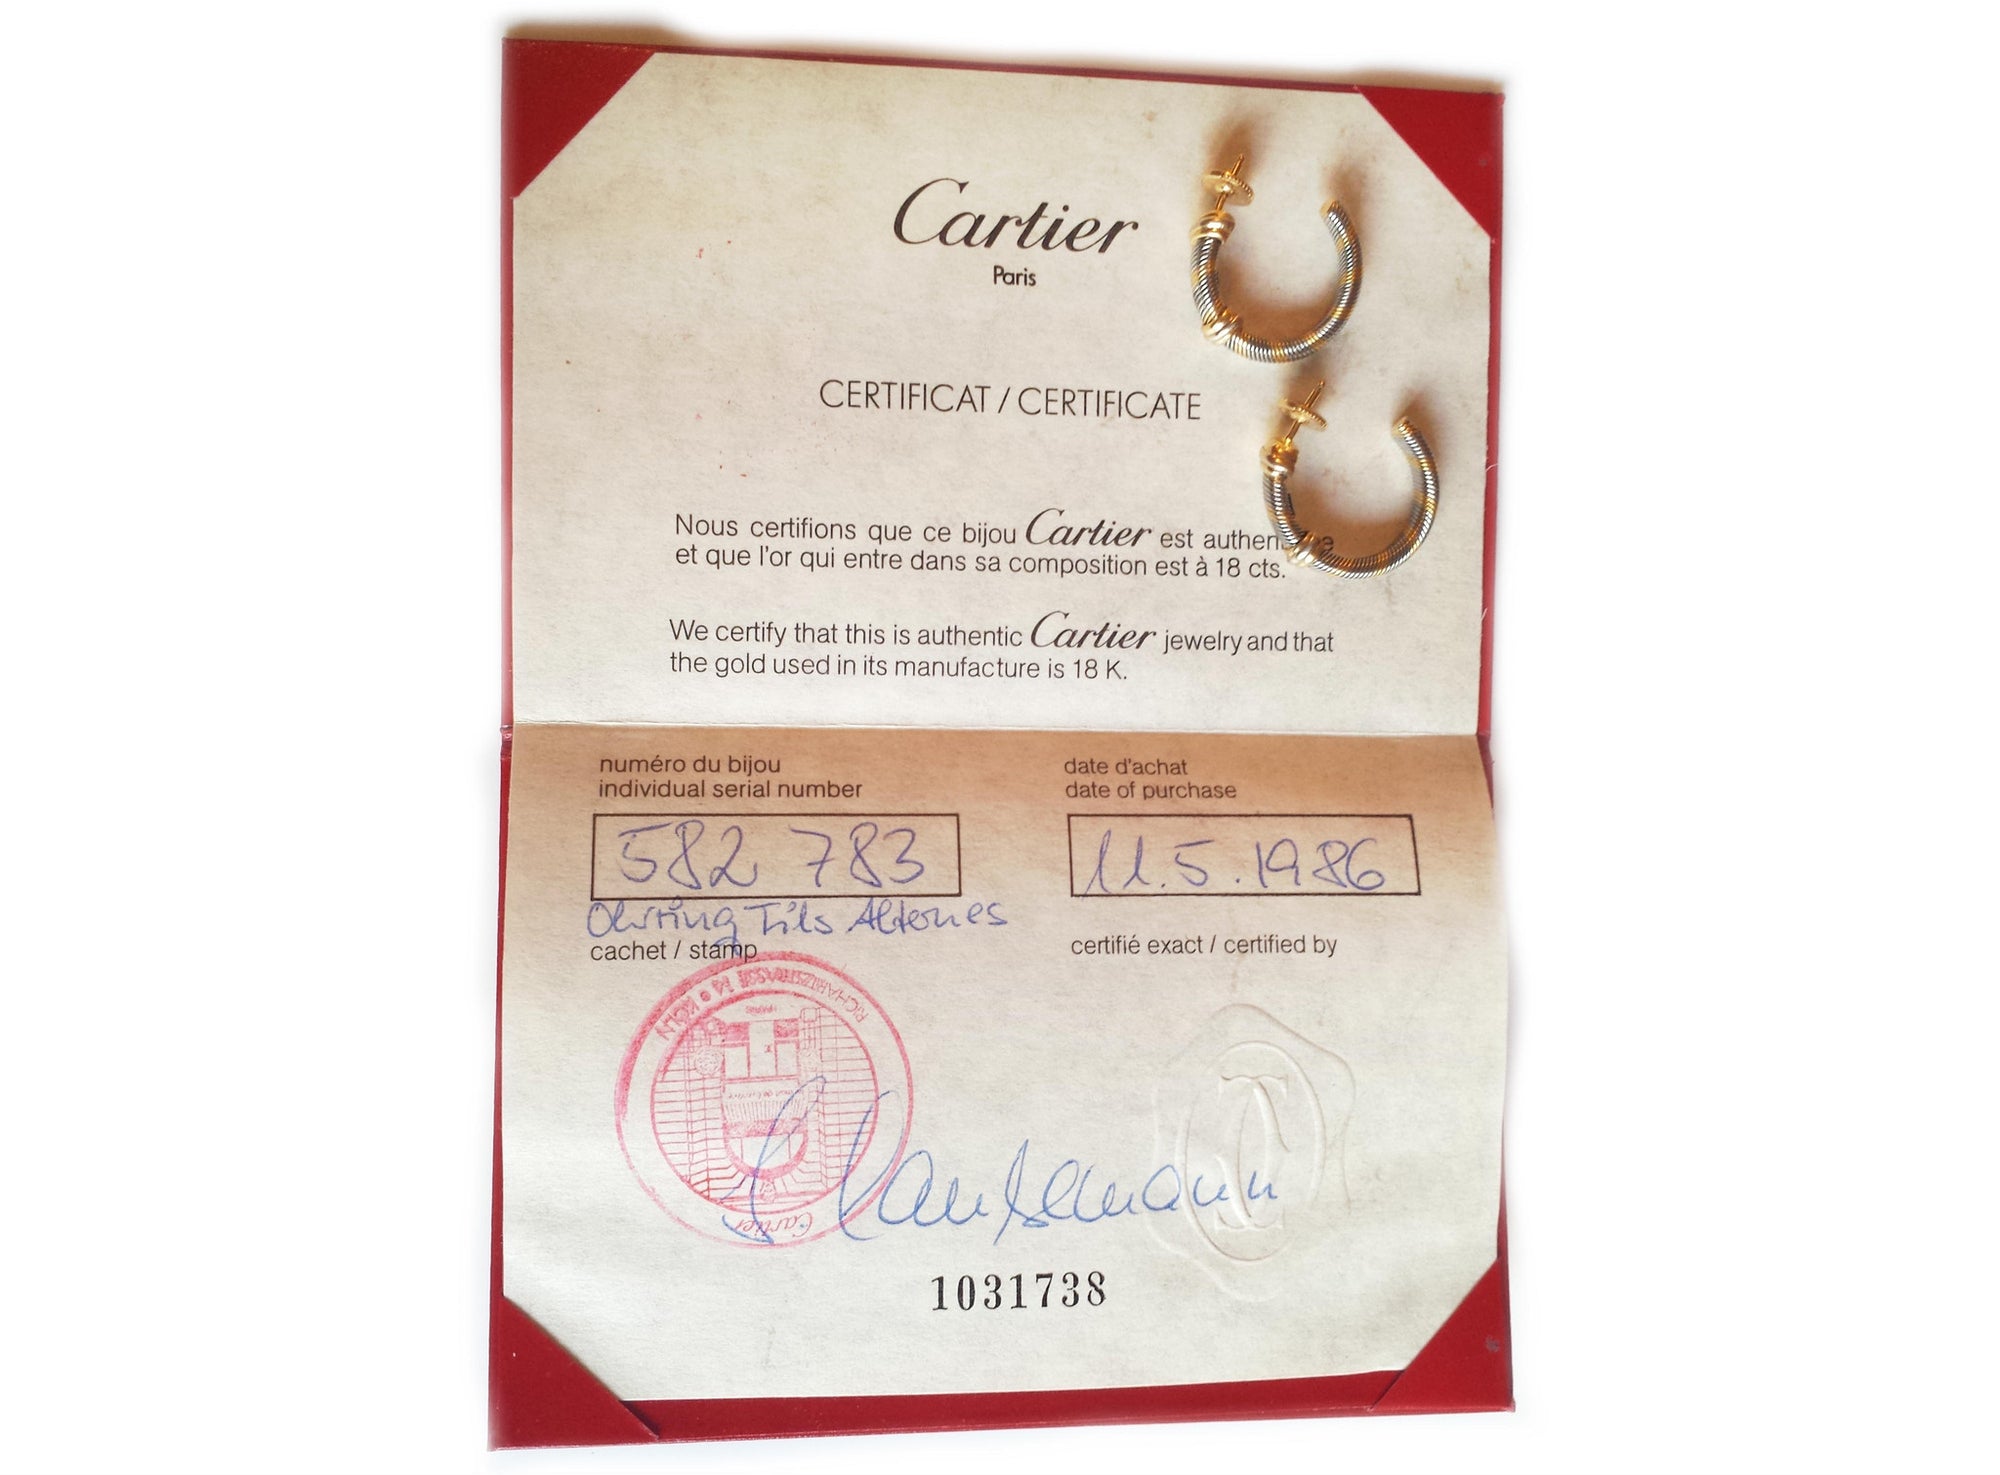 Cartier 1980s Aurore Vintage 18k Yellow Gold & Steel Wire Hoop Earrings